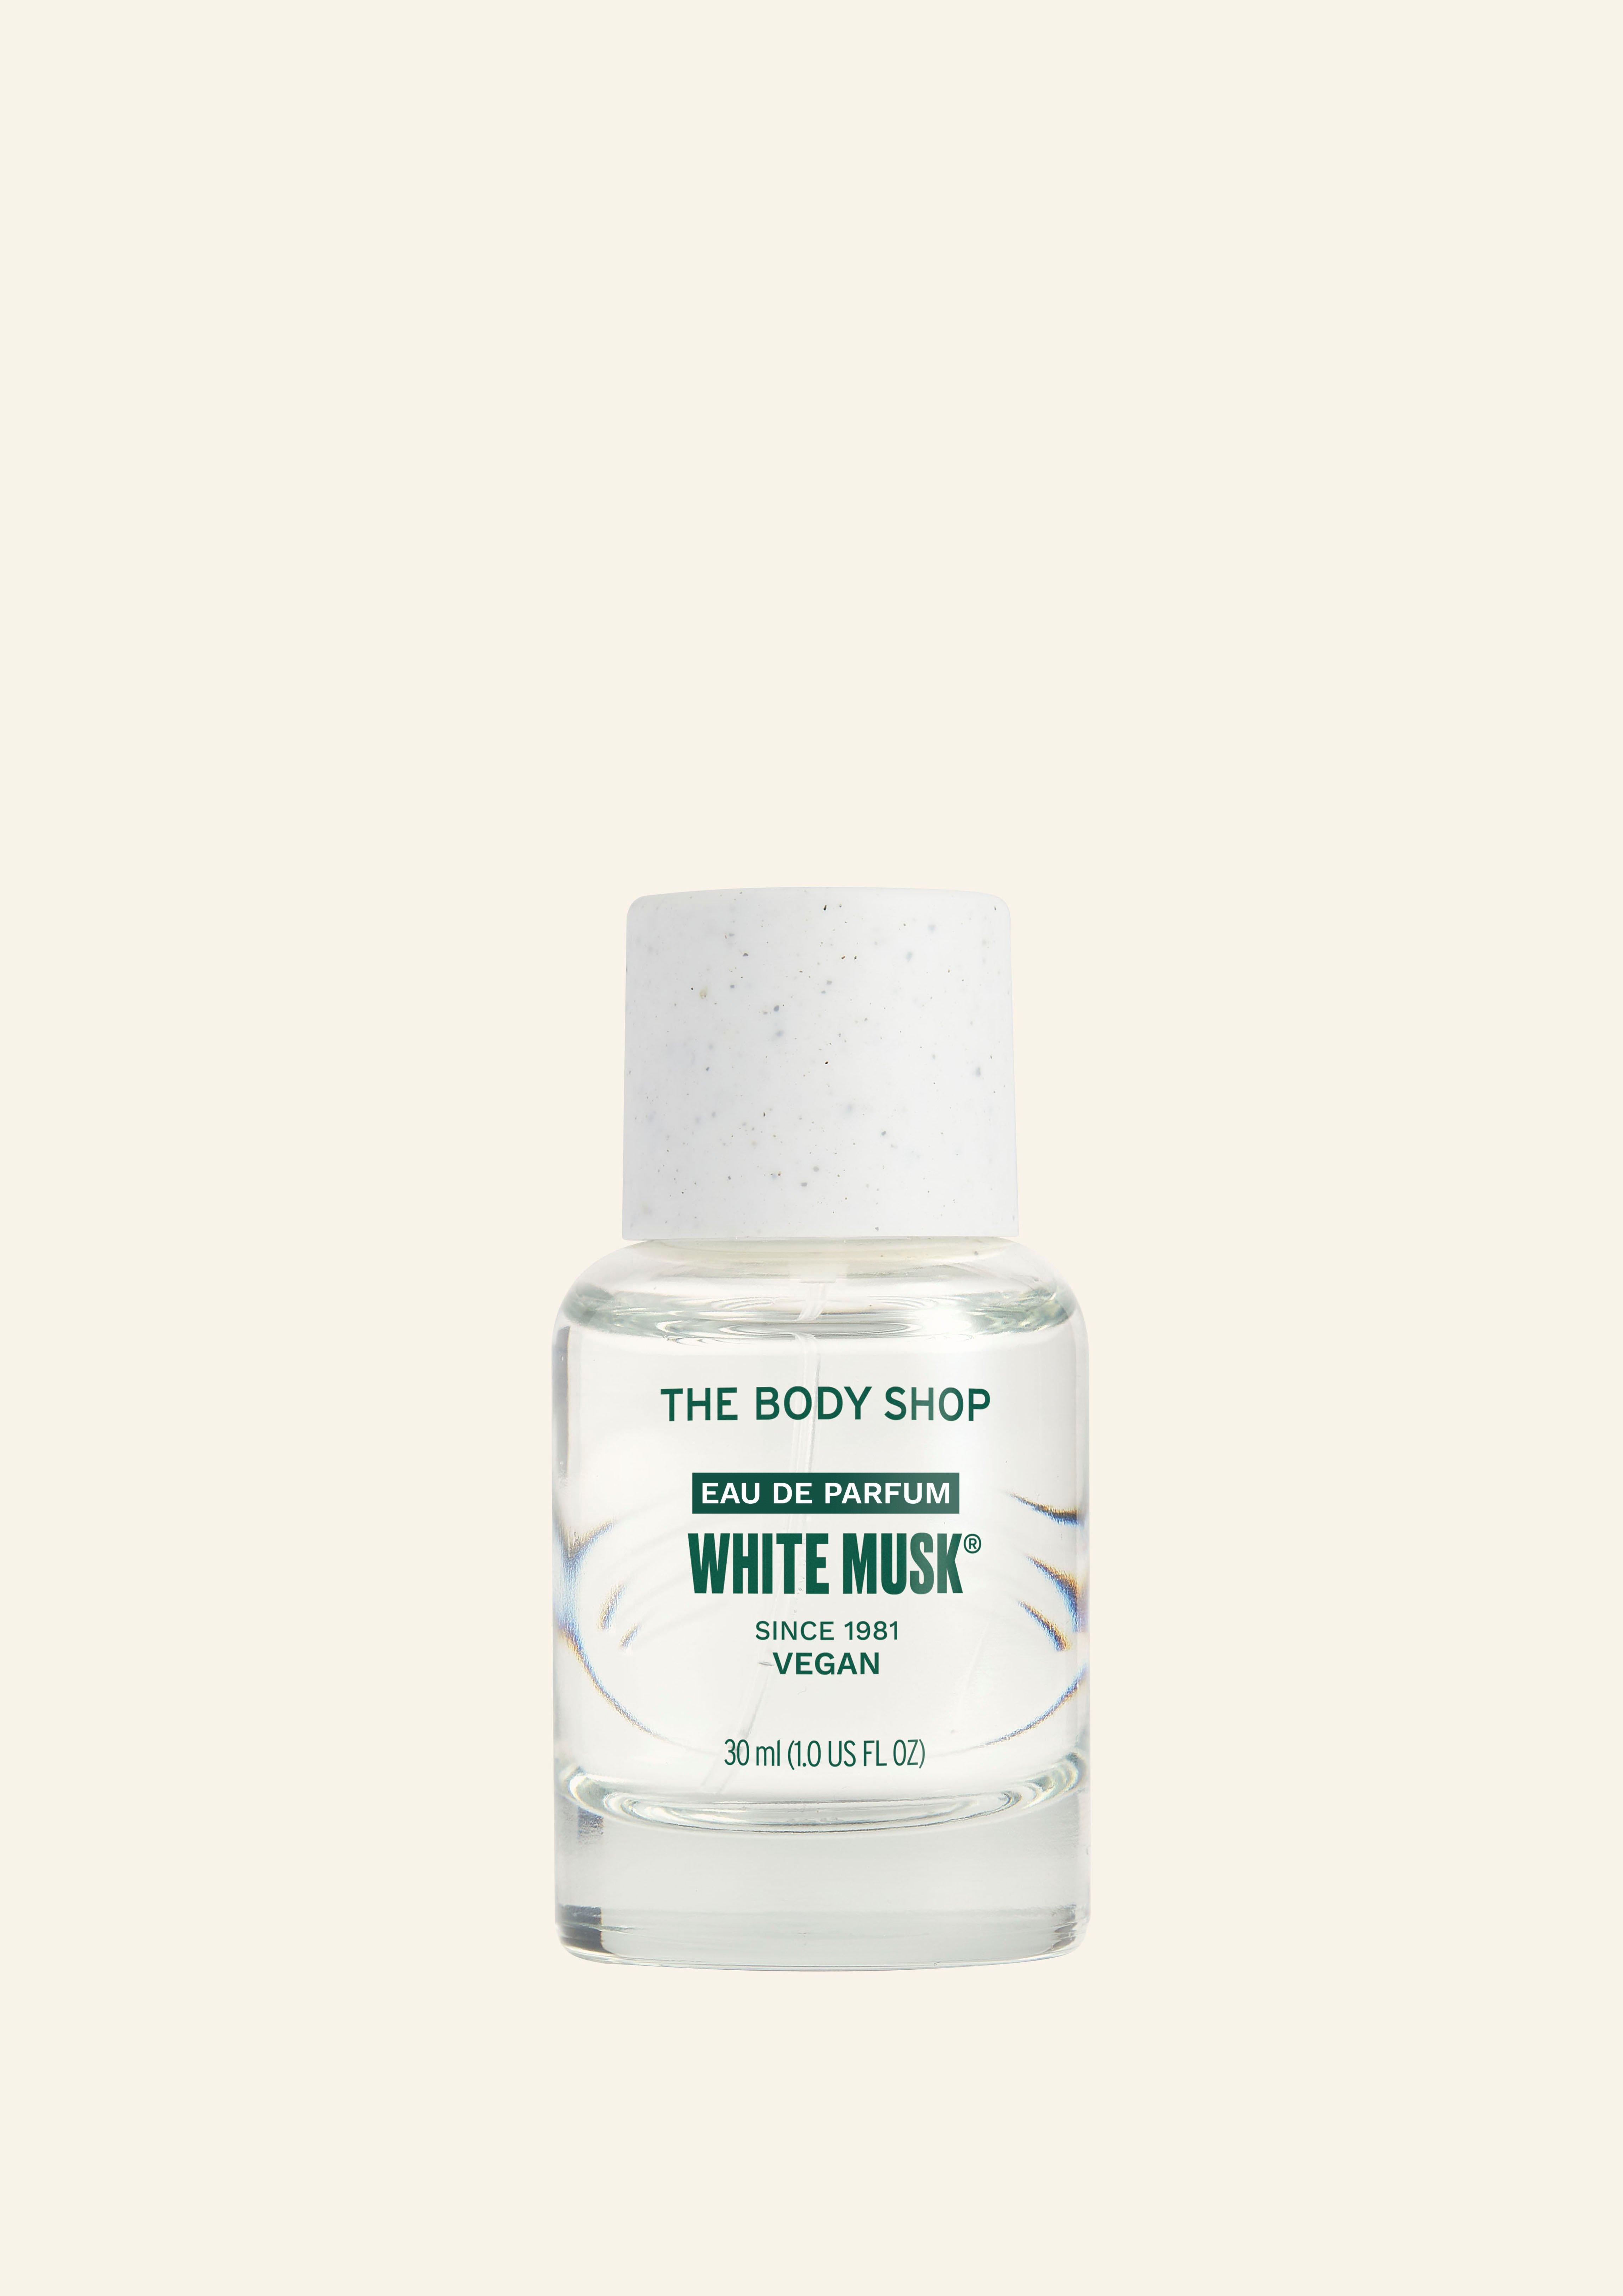 The Body Shop White Musk - Perfume Oil 20 ml (0.67 oz) Vegan